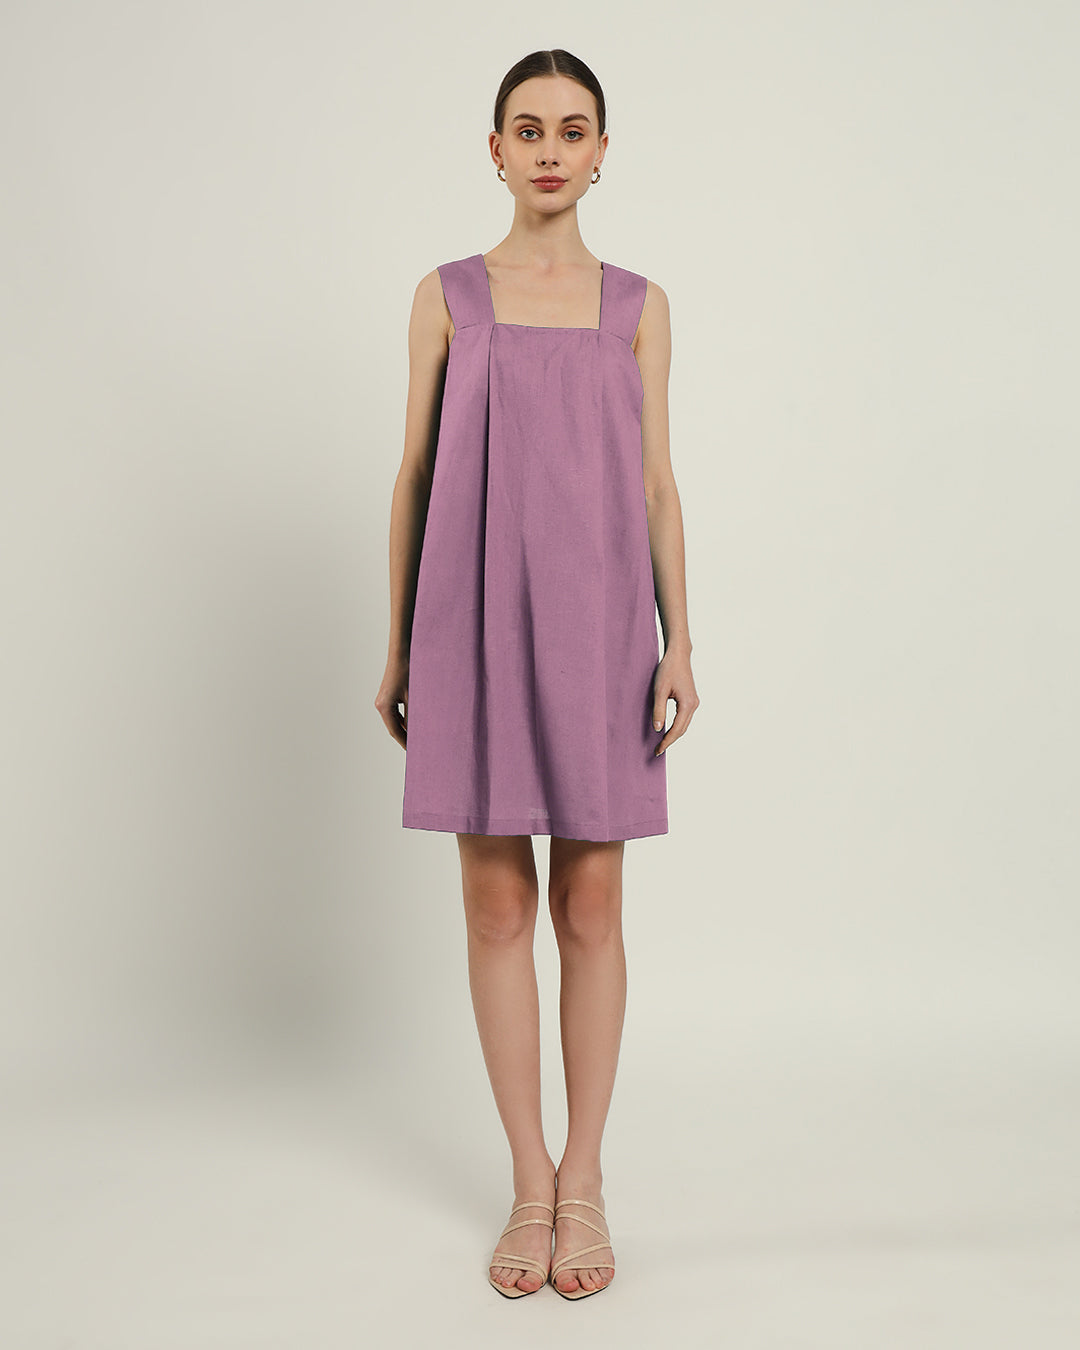 The Larissa Purple Swirl Cotton Dress